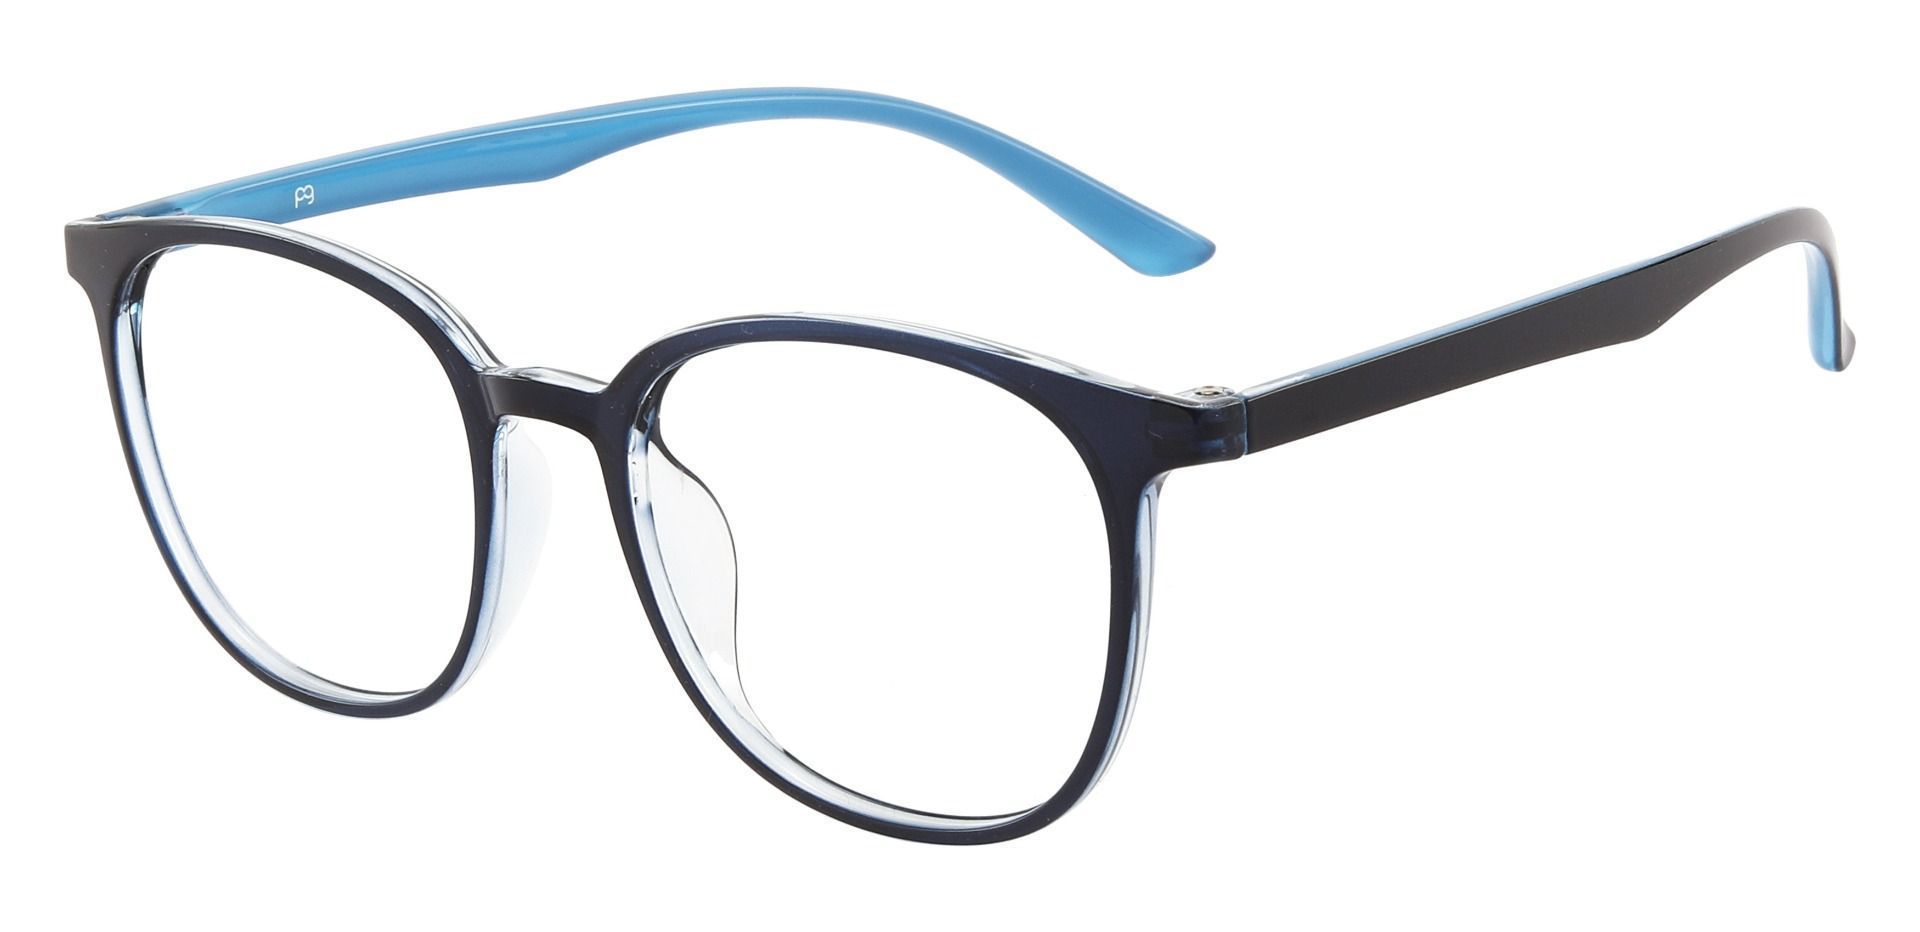 Kelso Square Lined Bifocal Glasses - Blue